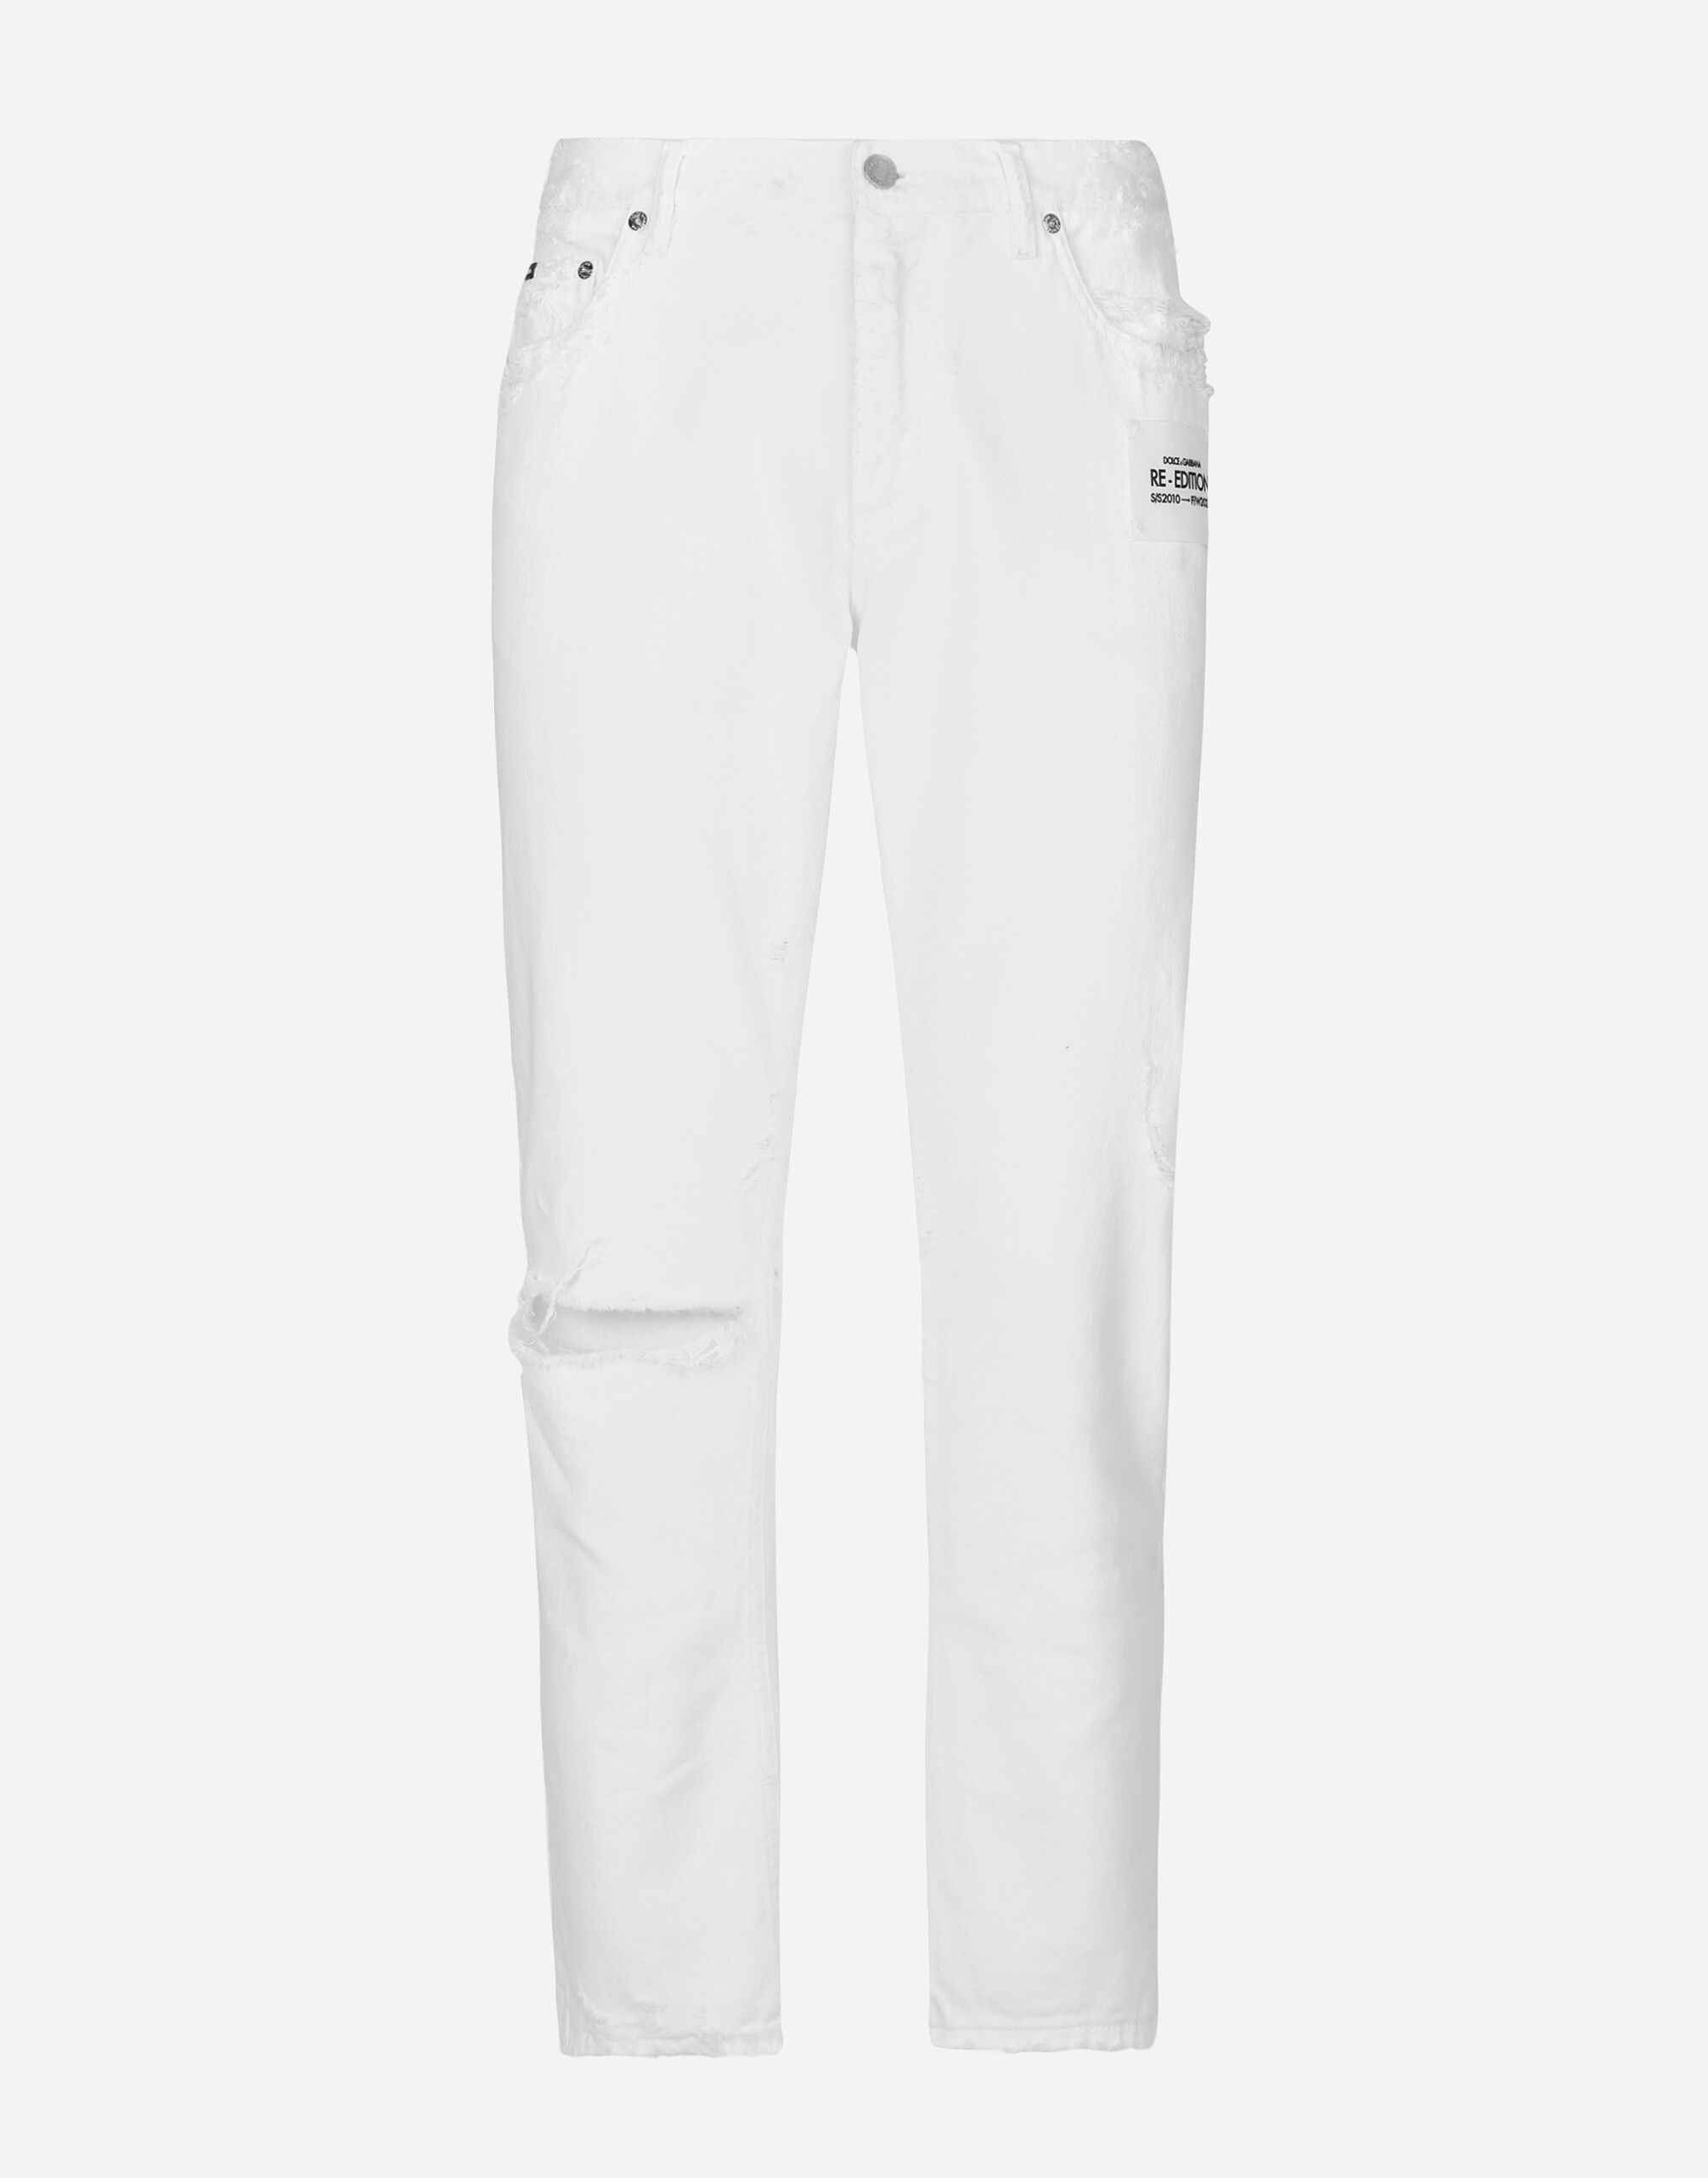 Dolce & Gabbana جينز أبيض فضفاض بتفاصيل ممزقة وكشوط أبيض VG4444VP287